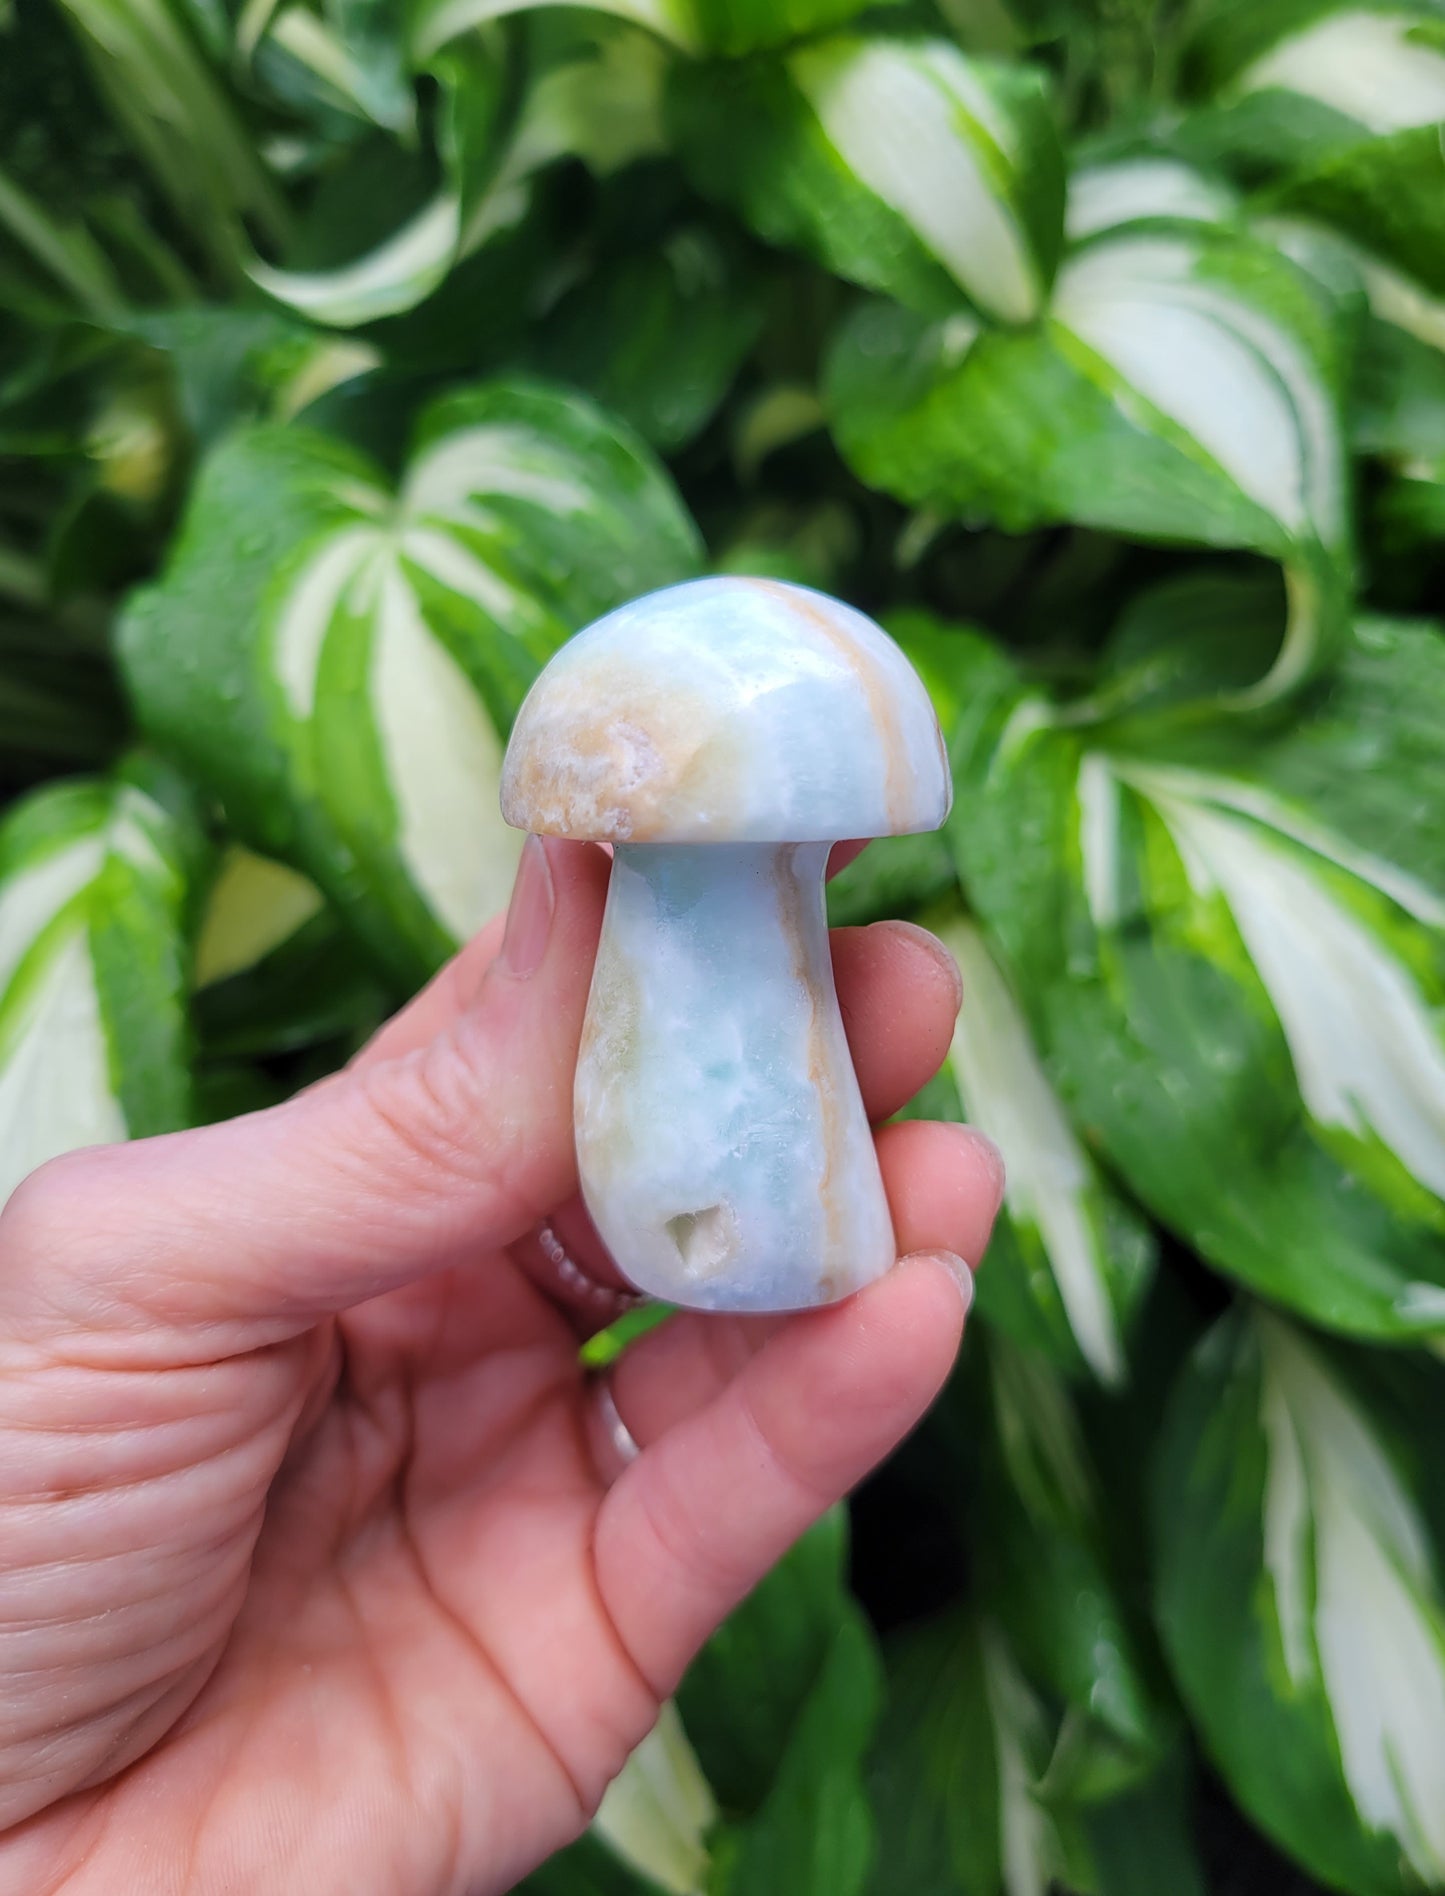 Mushroom SET from Pakistan - Blue Aragonite, Pink Calcite, White Calcite